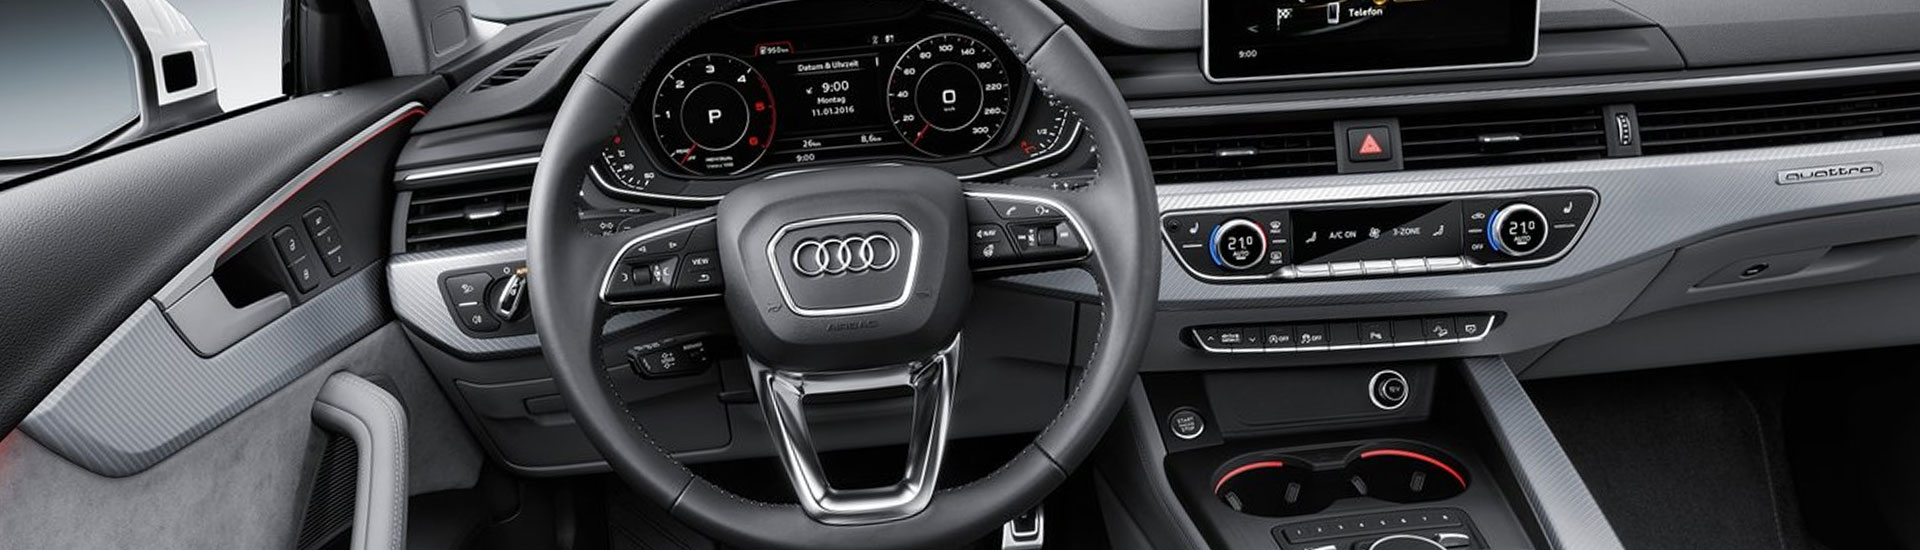 Audi Allroad Custom Dash Kits